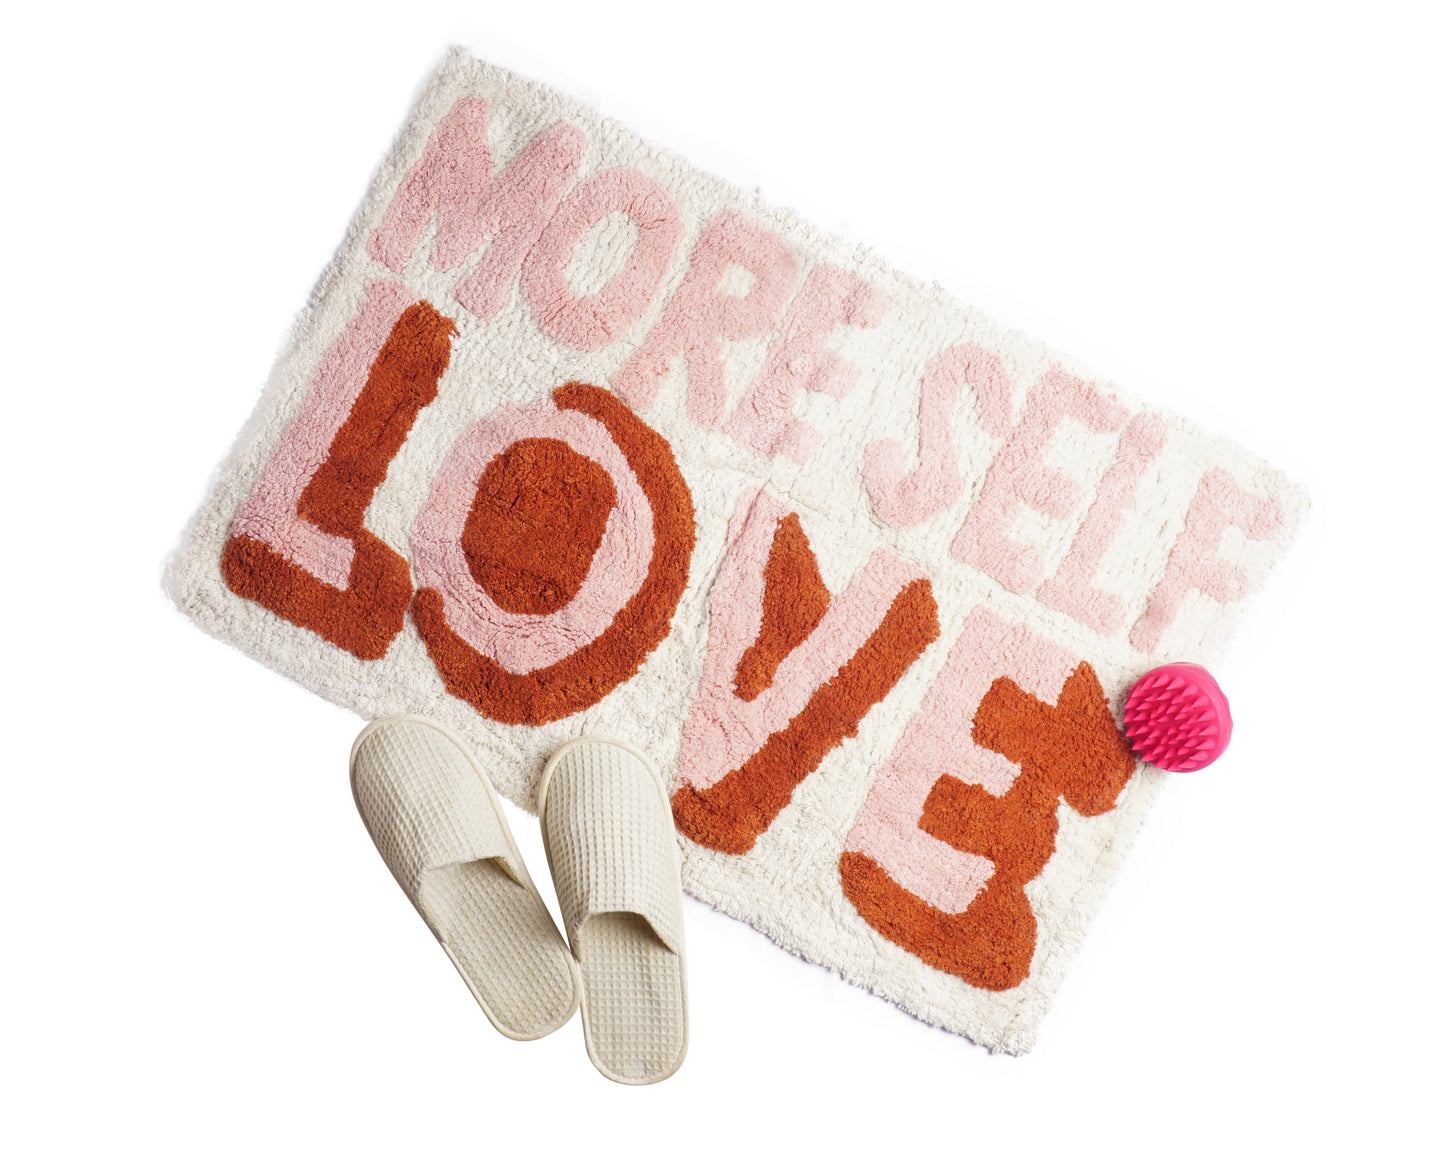 Quirky slogan bath/door mat : More self love